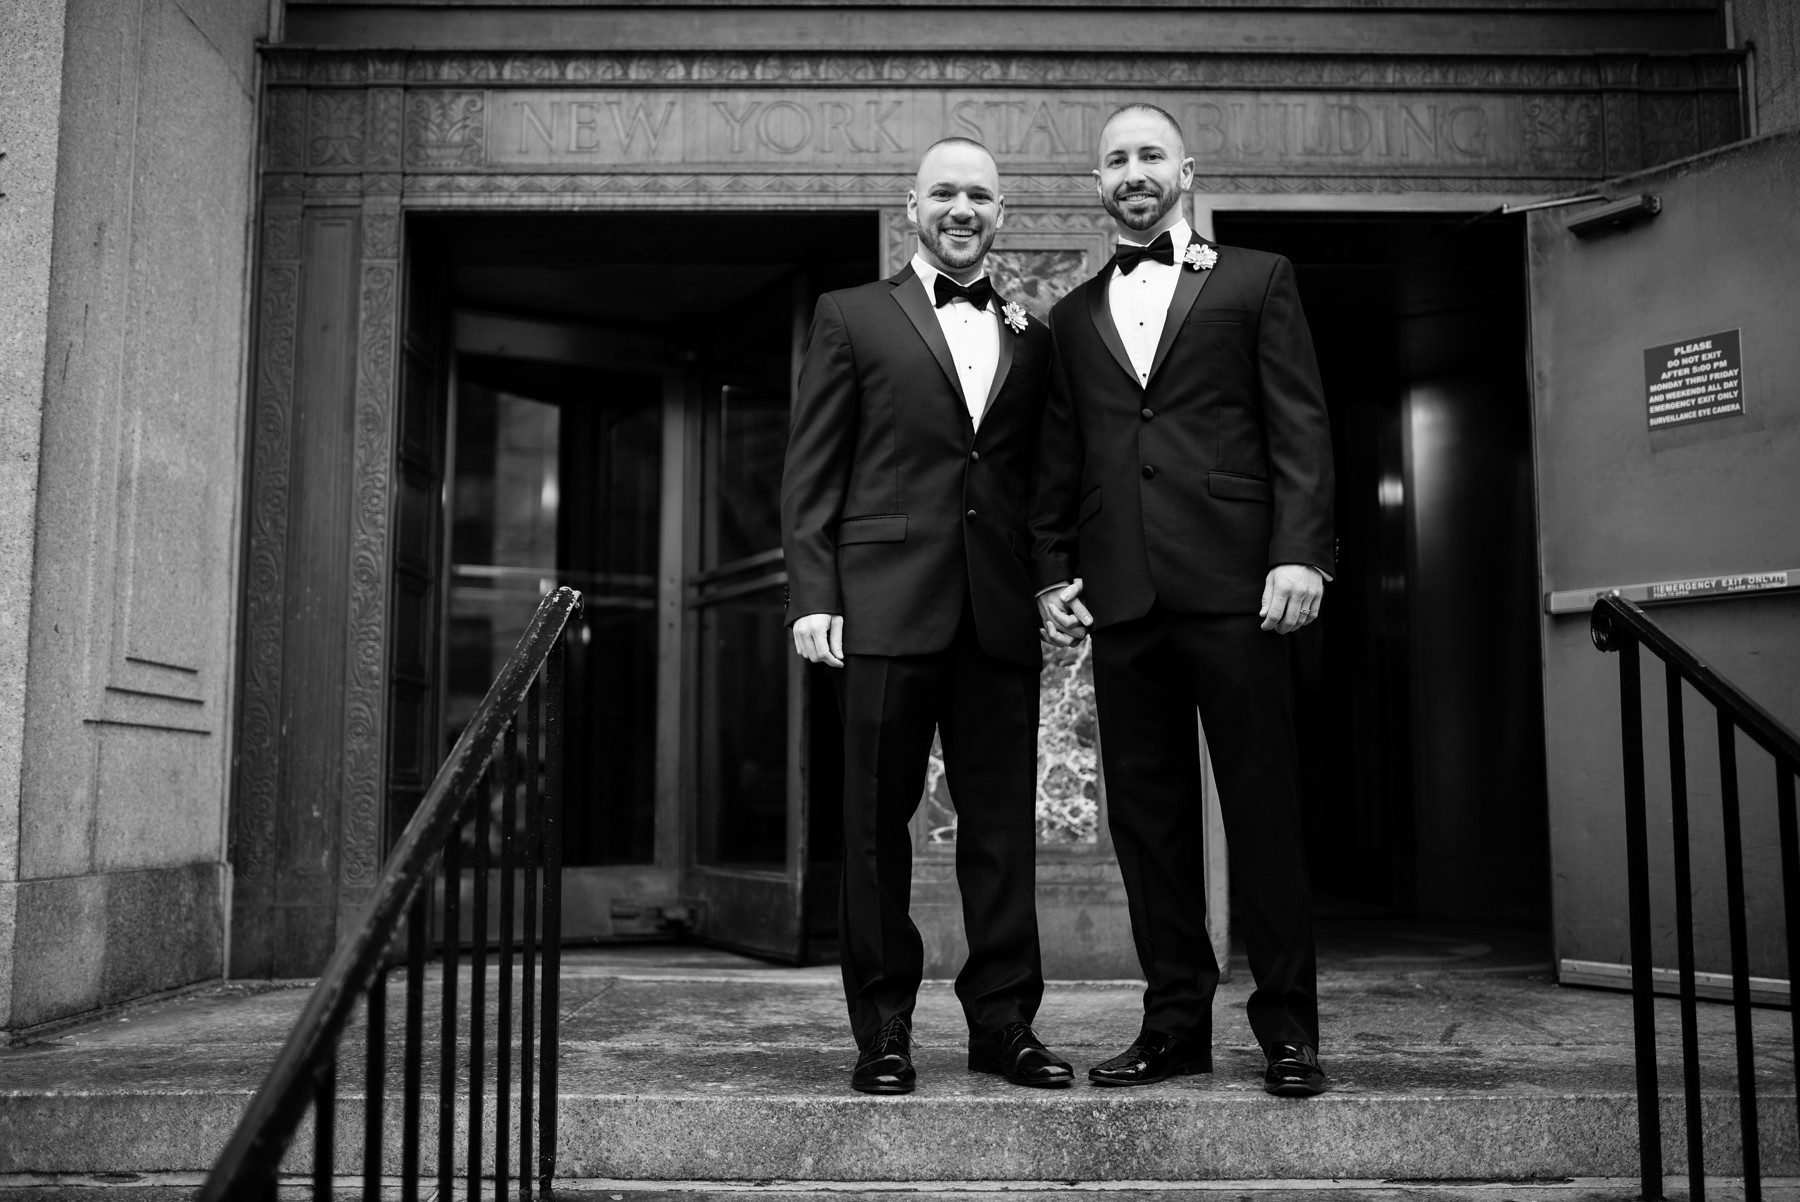 New York City Clerk Wedding Marriage Equality